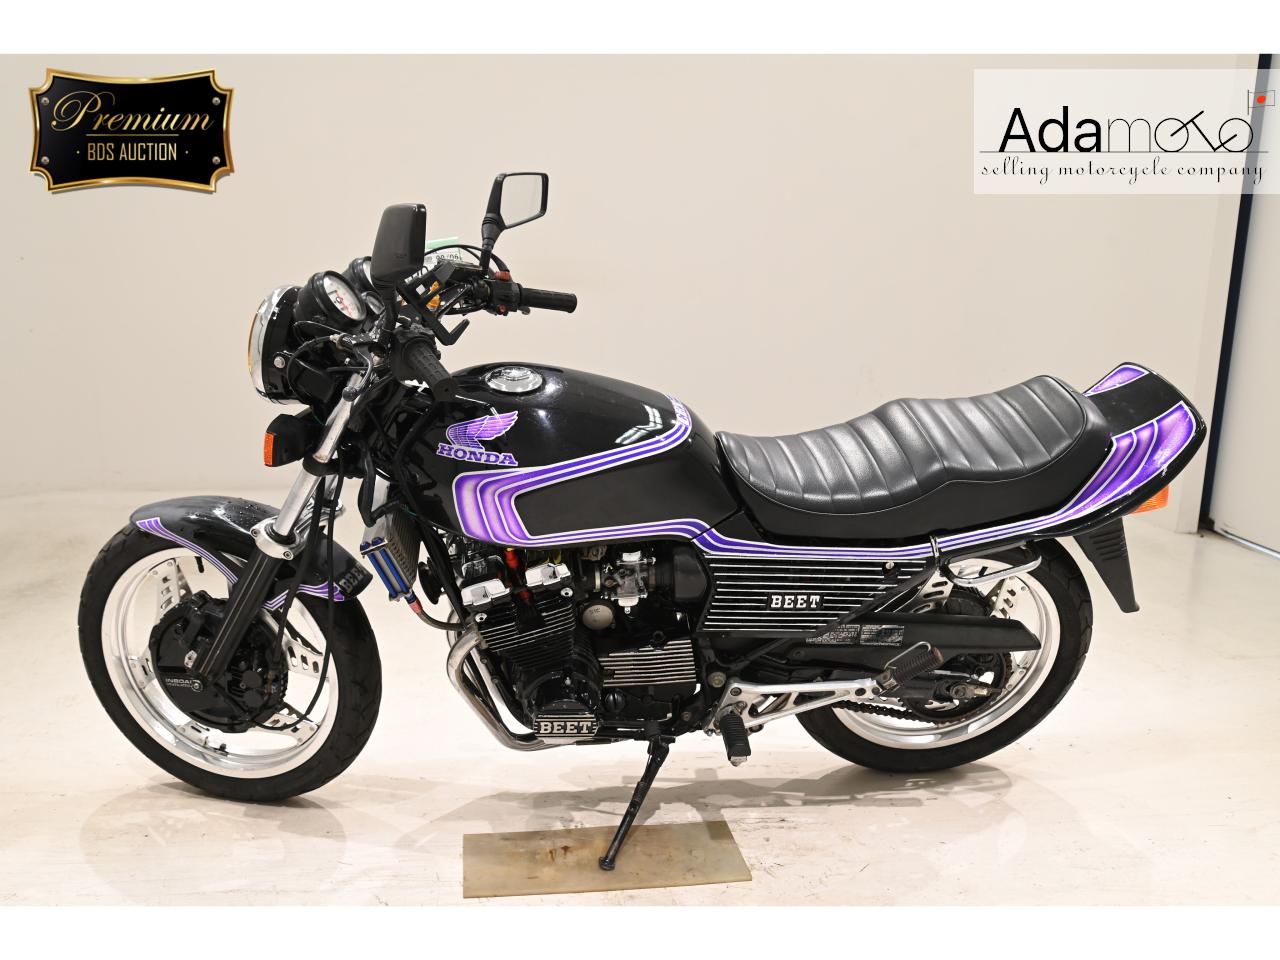 Honda CBX400F 1 - Adamoto - Motorcycles from Japan